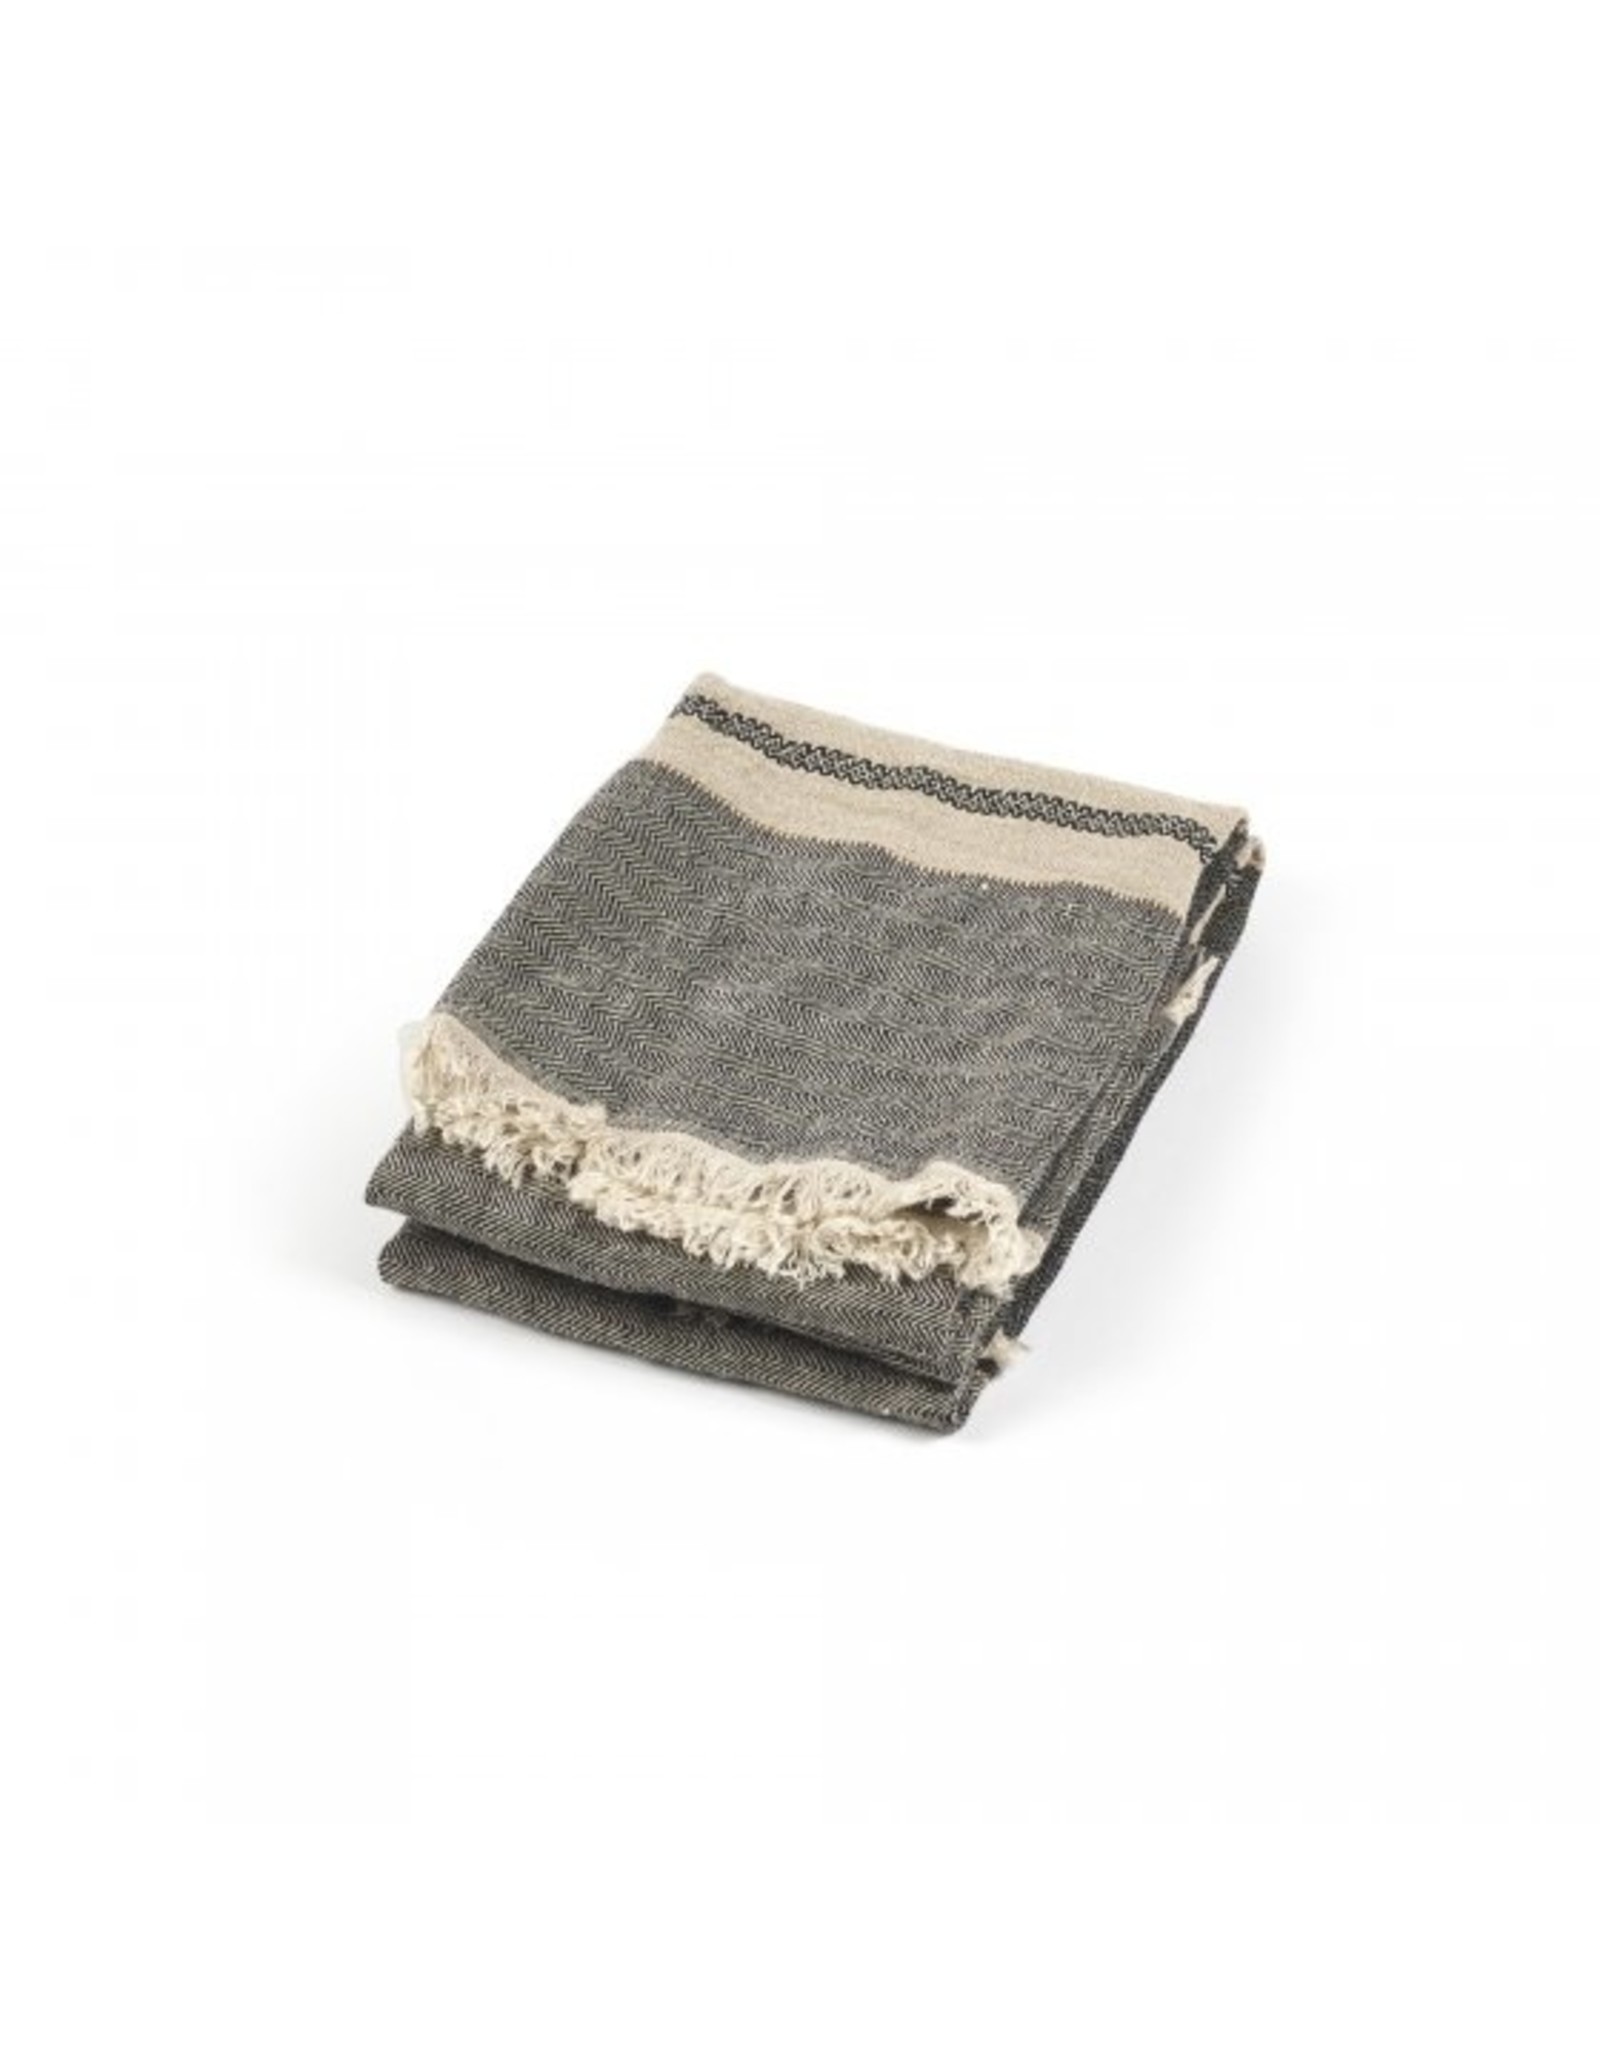 The Belgian Tack Stripe Small Fouta Towel 14 x 20